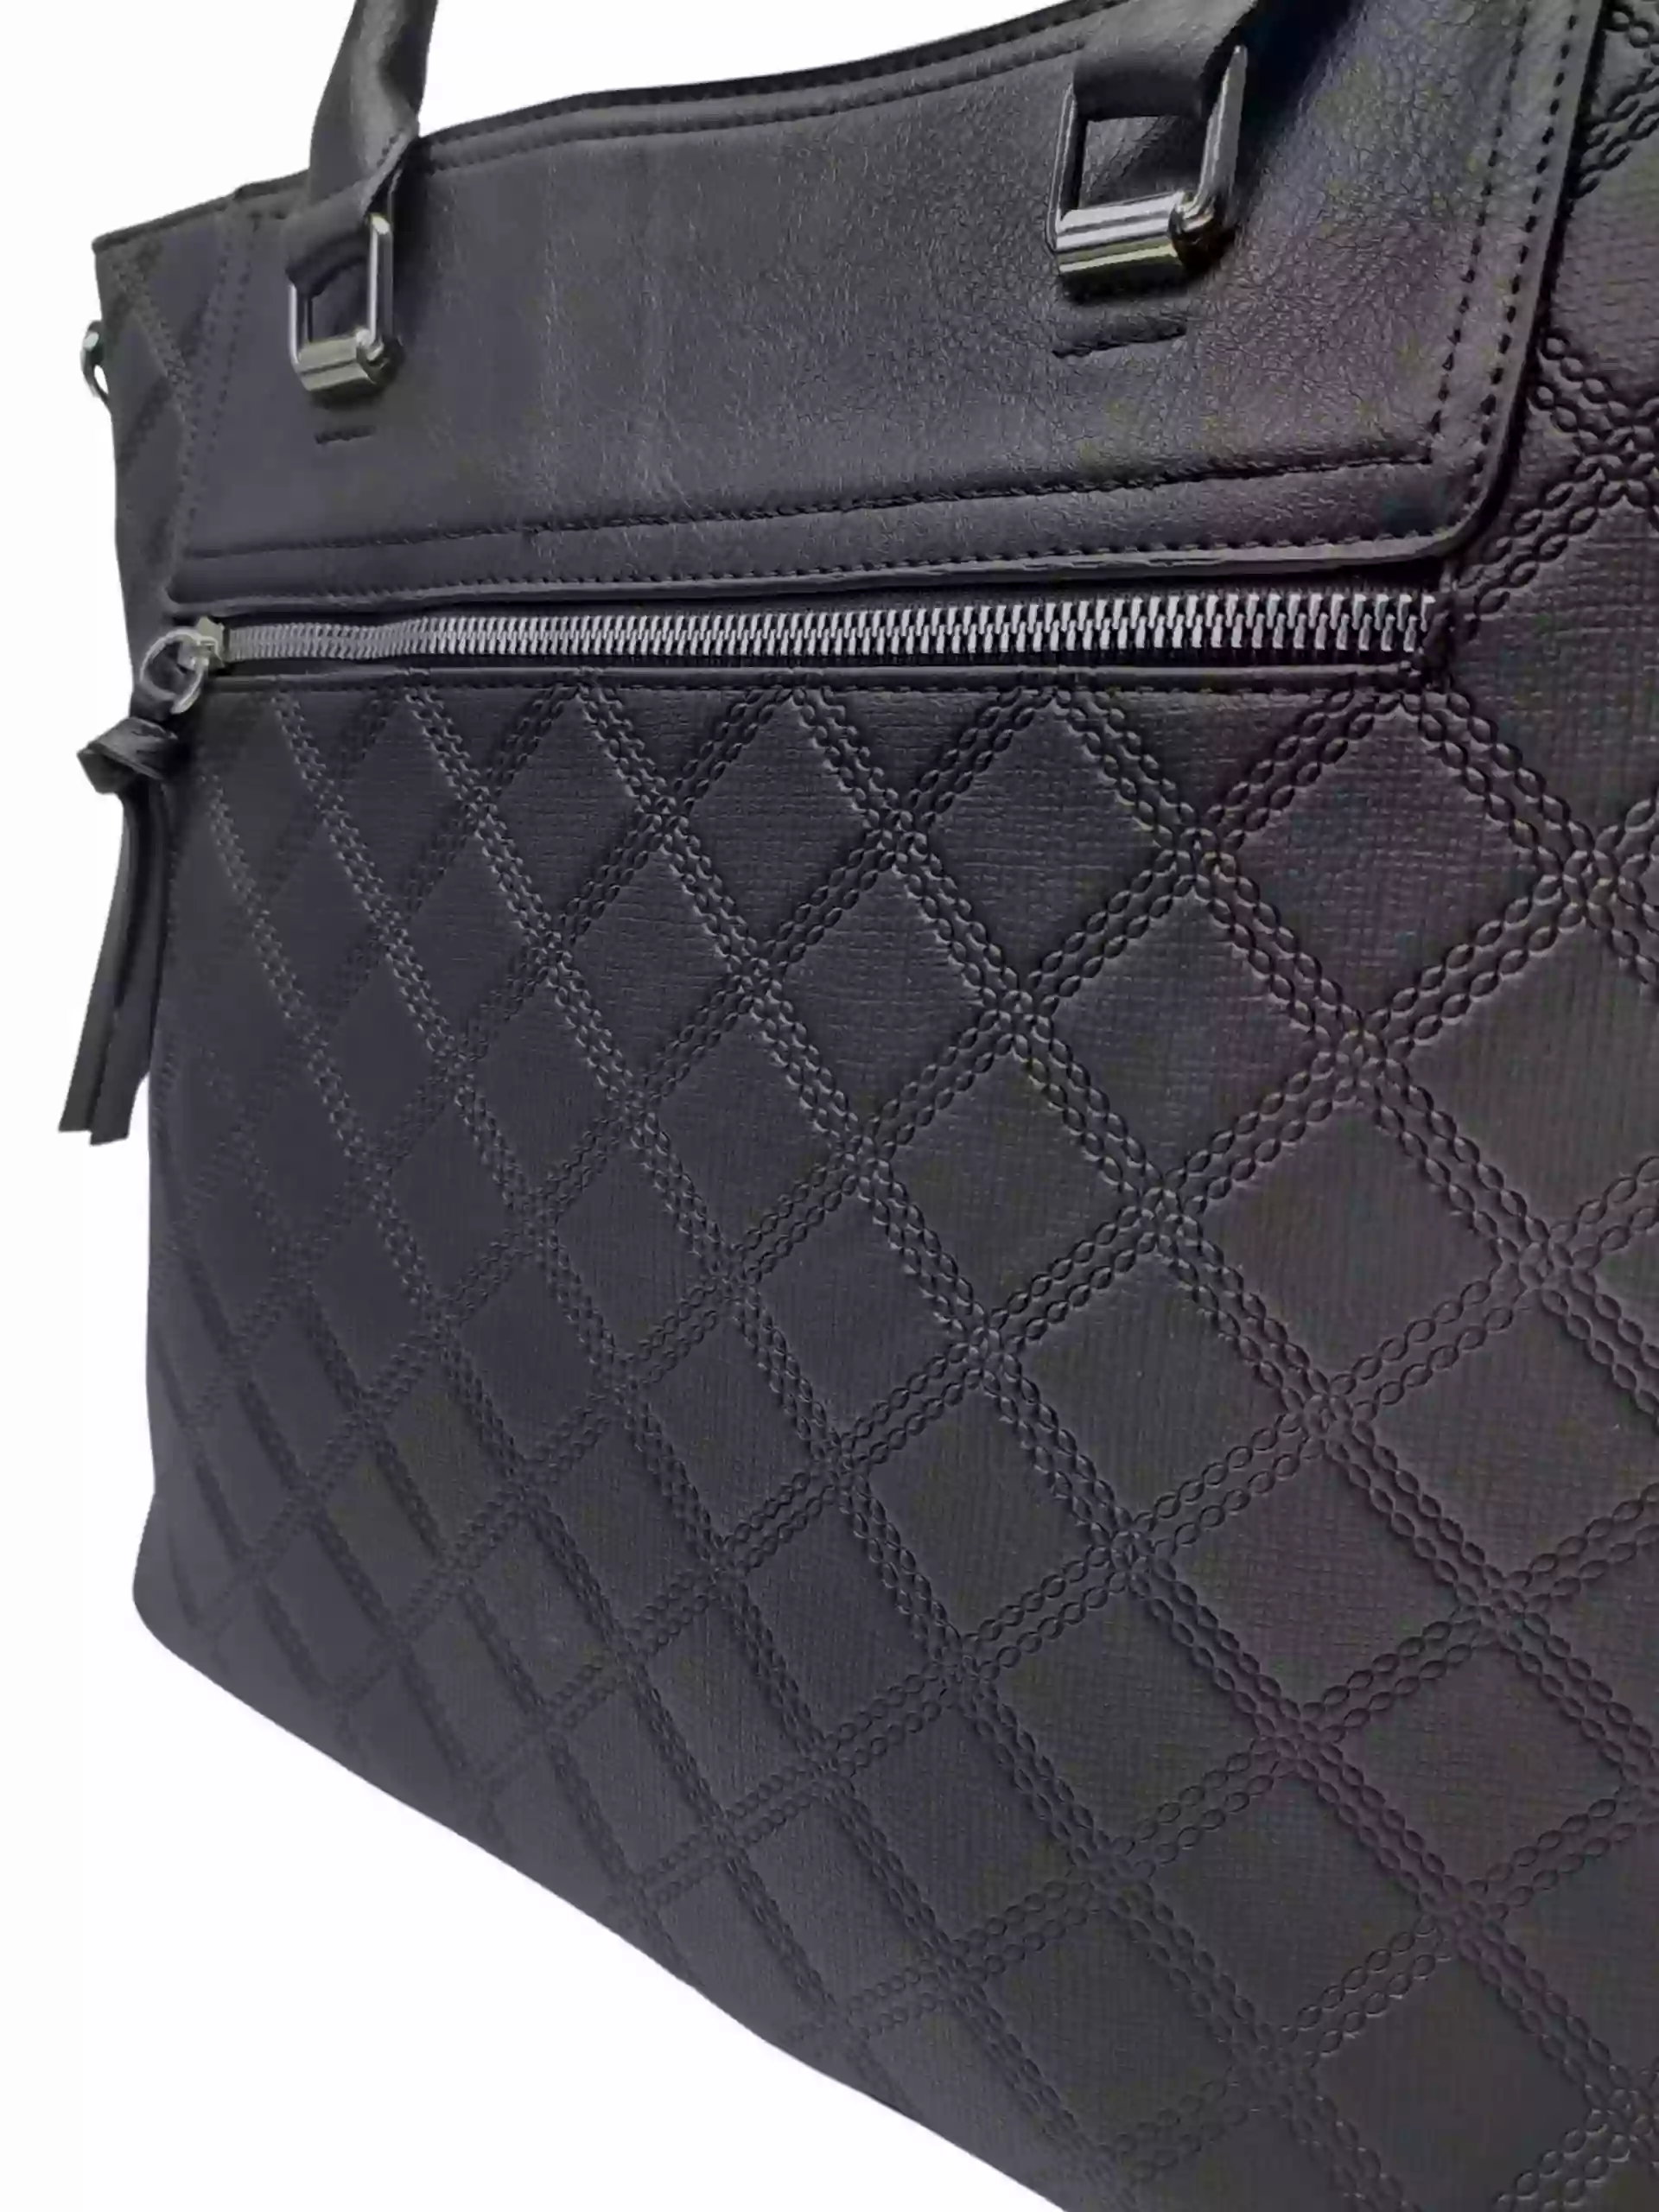 Černá kabelka s kosočtvercovým vzorem, Tapple, H190014, detail kabelky do ruky